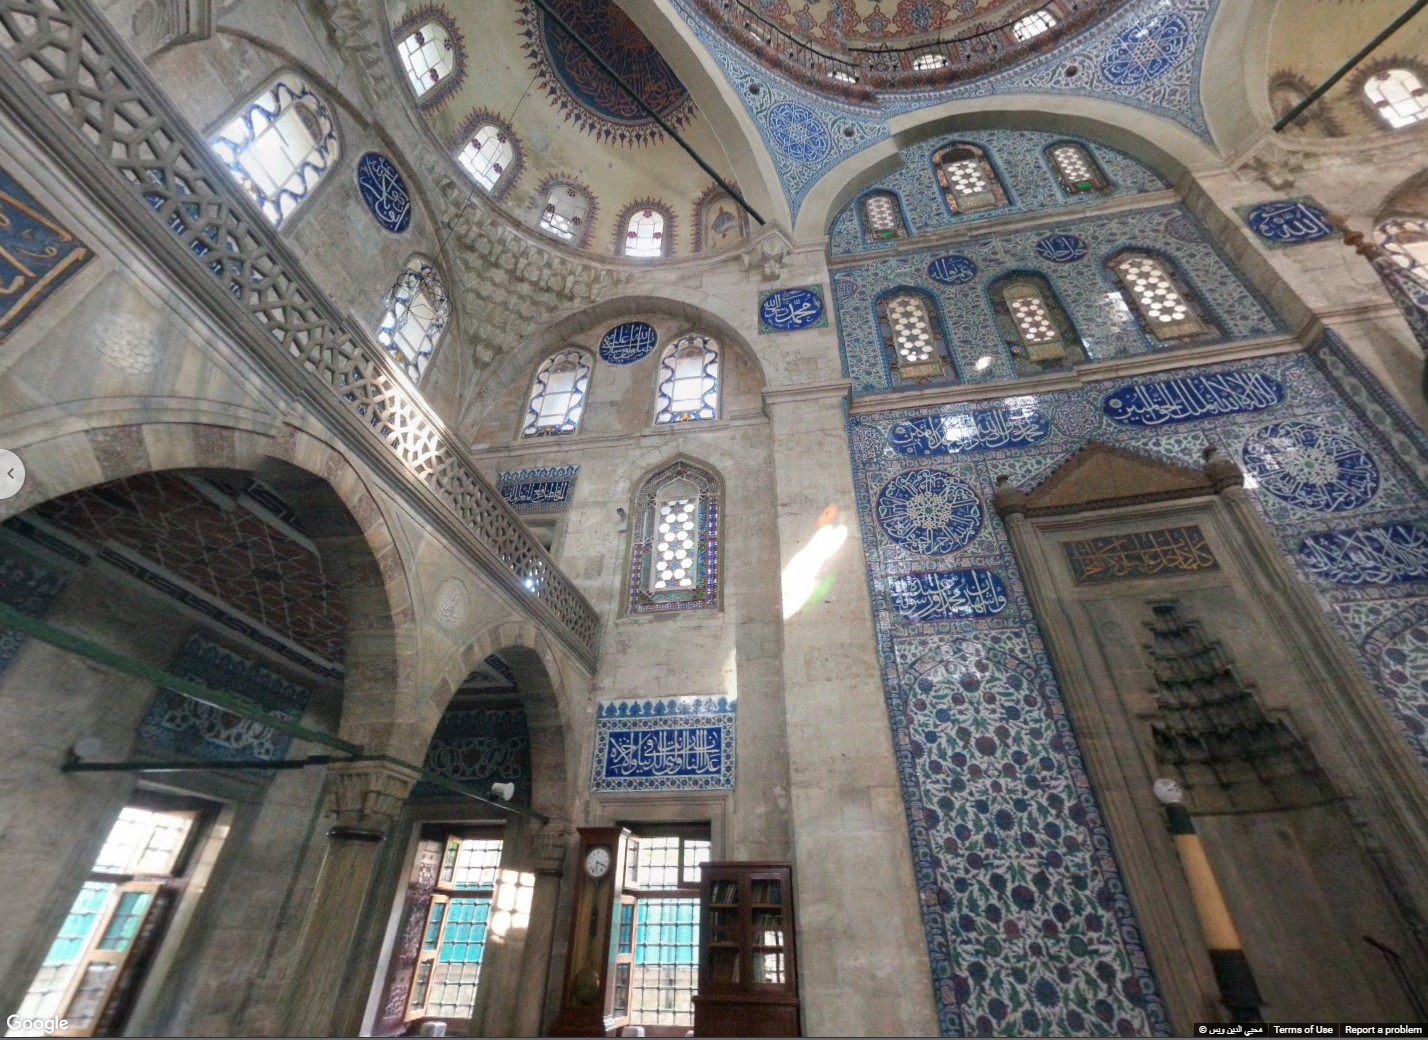 Sokollu Mehmet Pasha Mosque in present-day Istanbul, Turkey